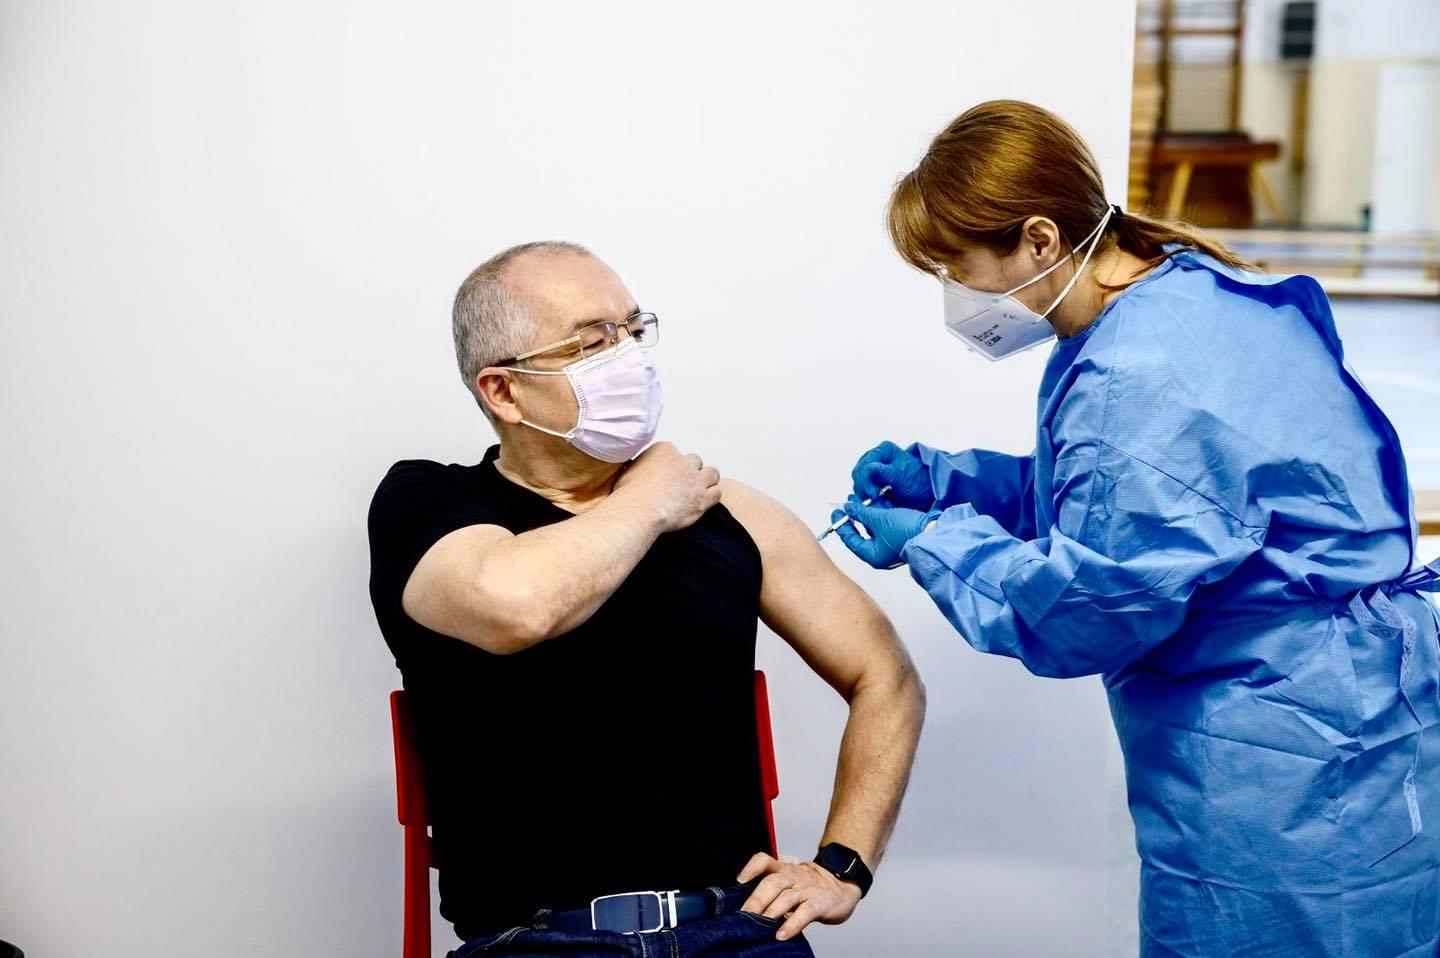 Emil Boc s-a vaccinat împotriva COVID: "Totul OK"